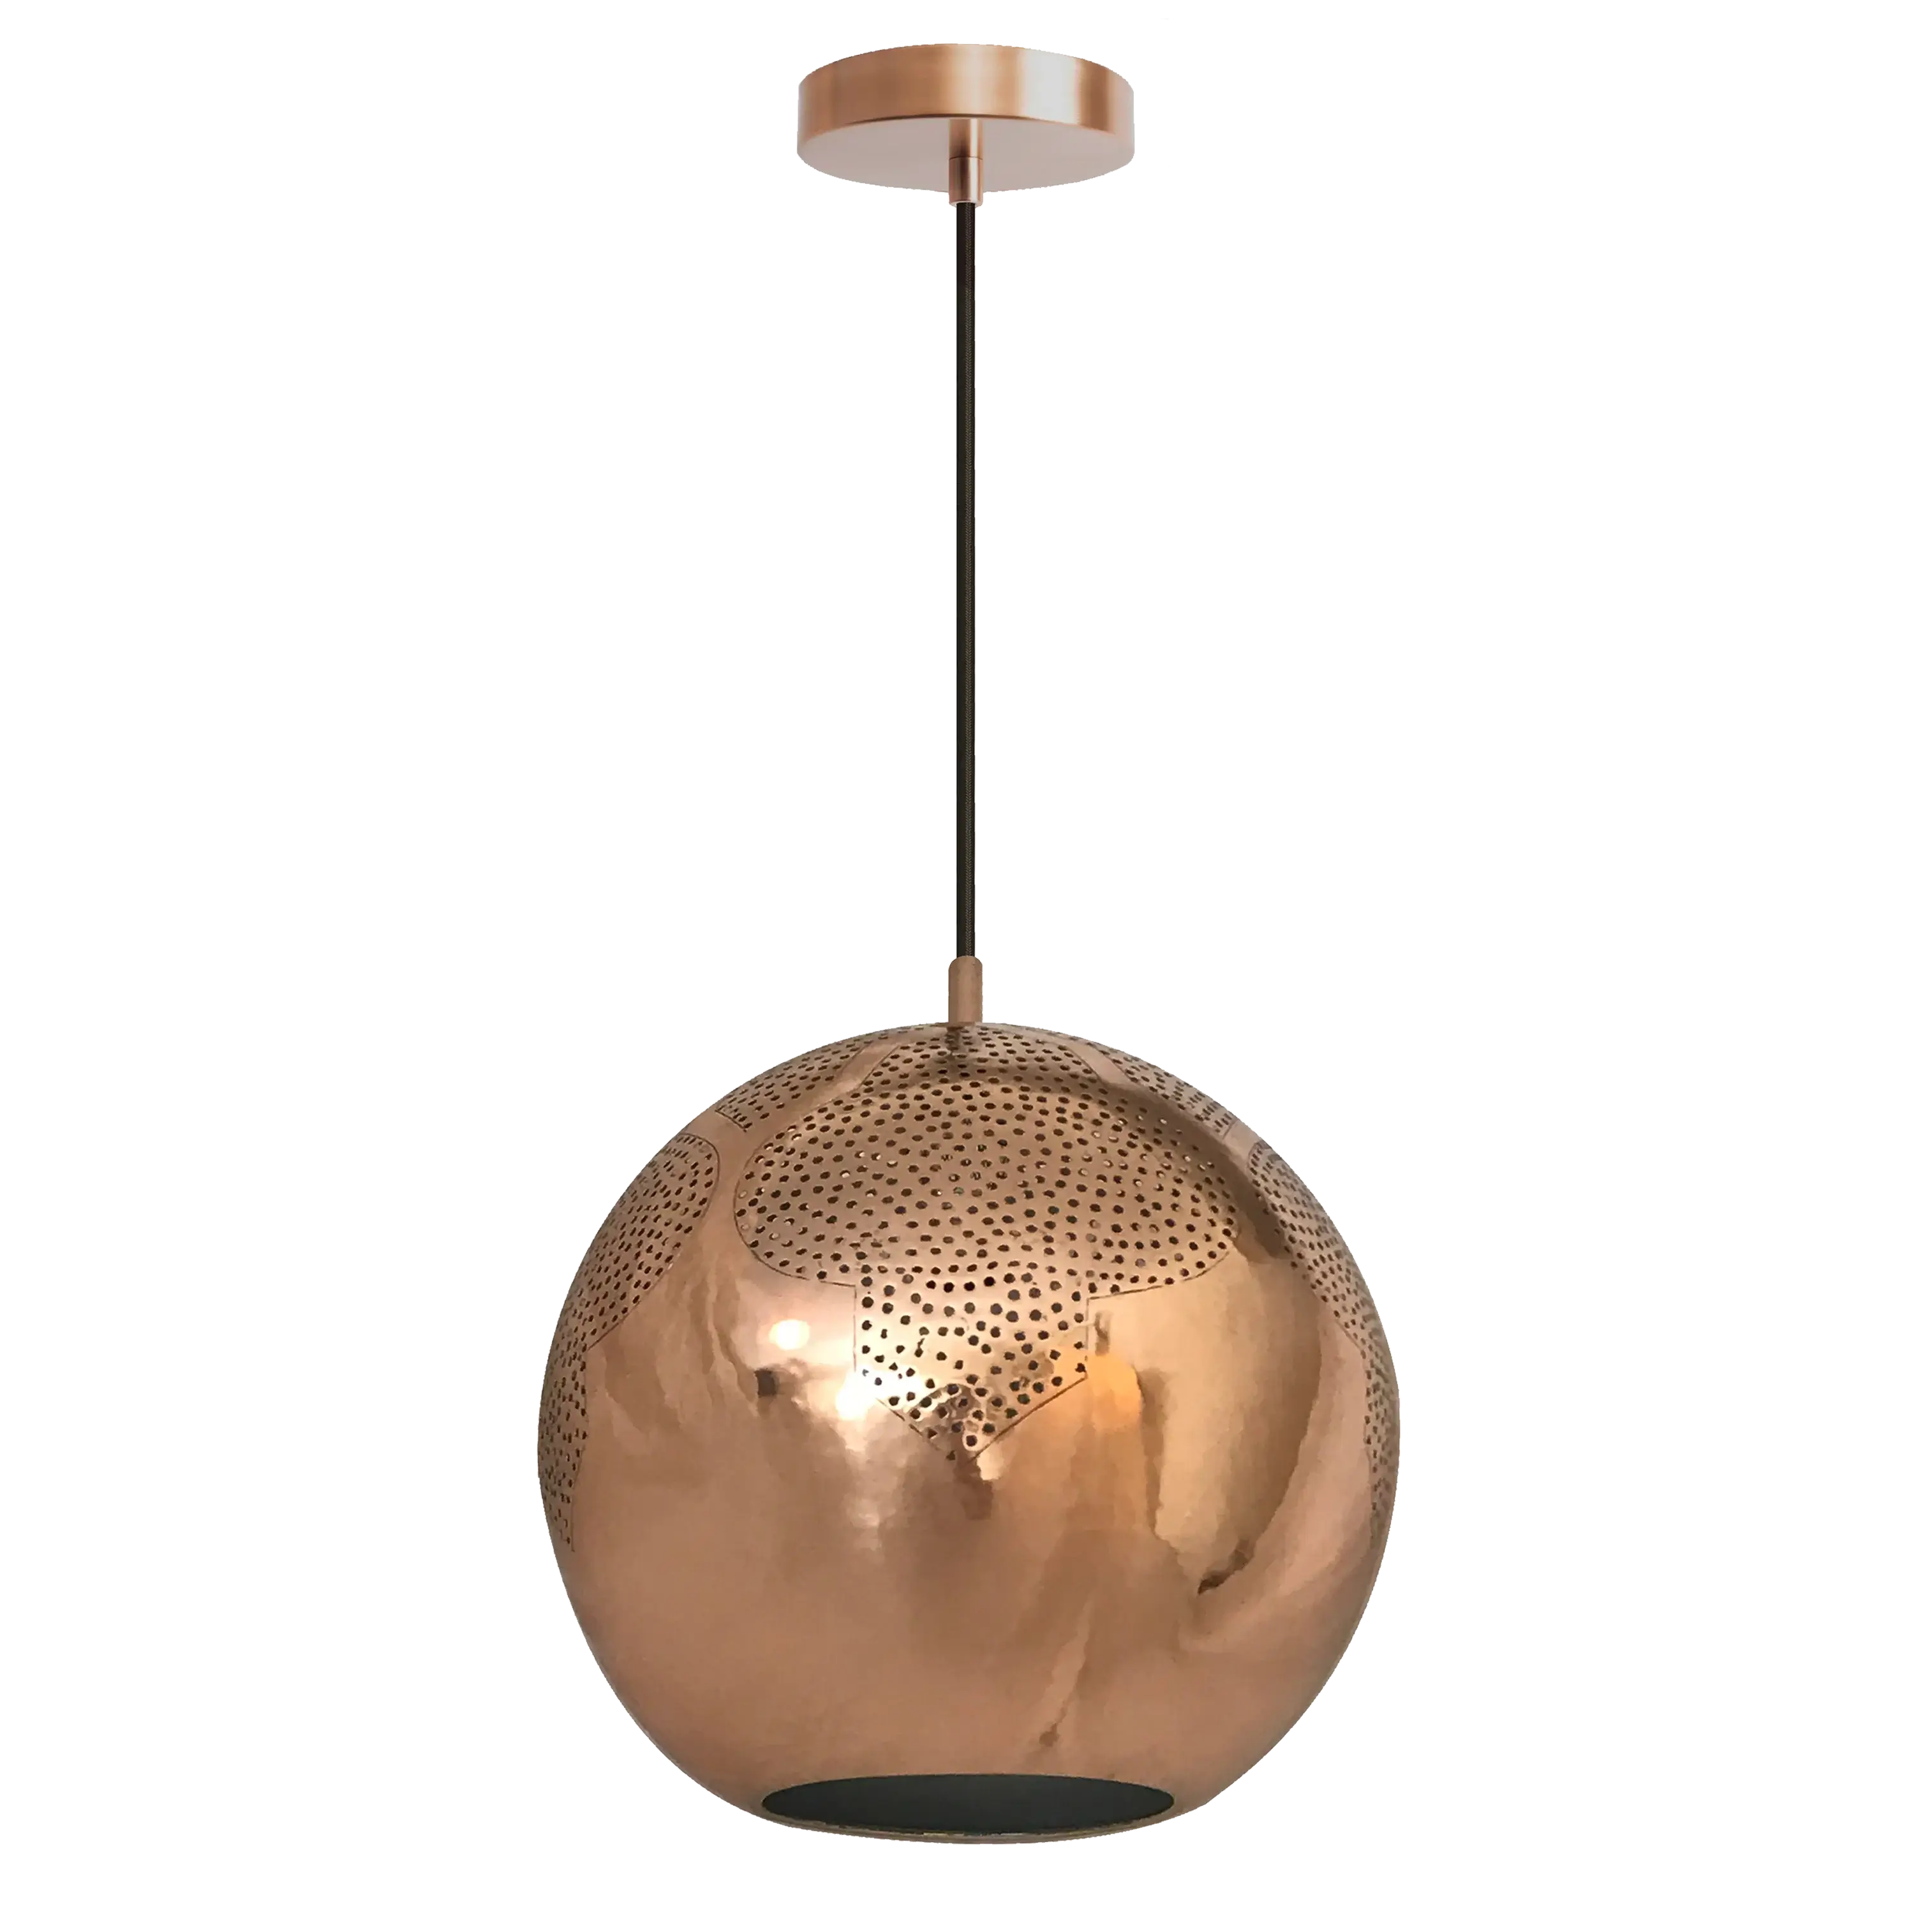 Dounia home Globe Pendant light in polished copper made of Metal, Model: Najma trellis